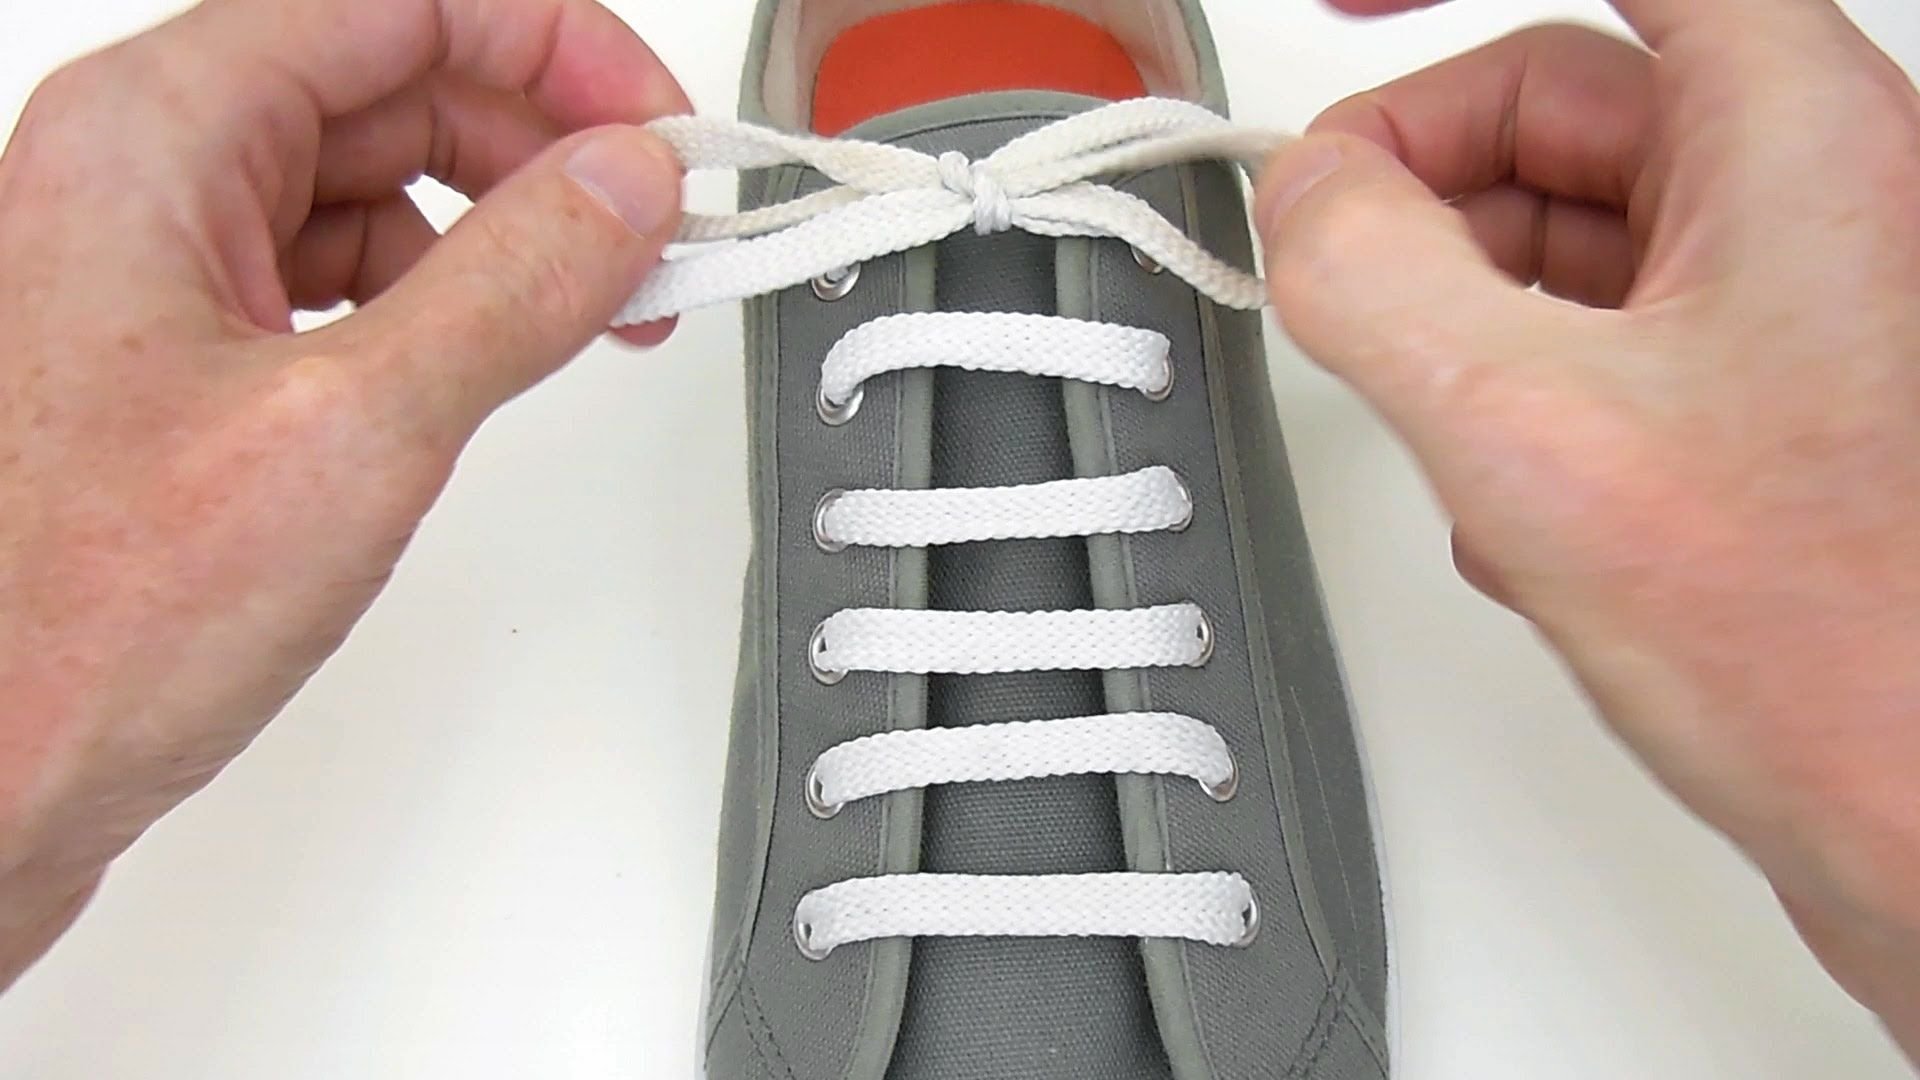 Шнурки на кроссовки видео. Шнуровка шнурков на Nike a913-6. Шнуровка "кеды". Красивая шнуровка обуви. Шнуровка на кроссовки.